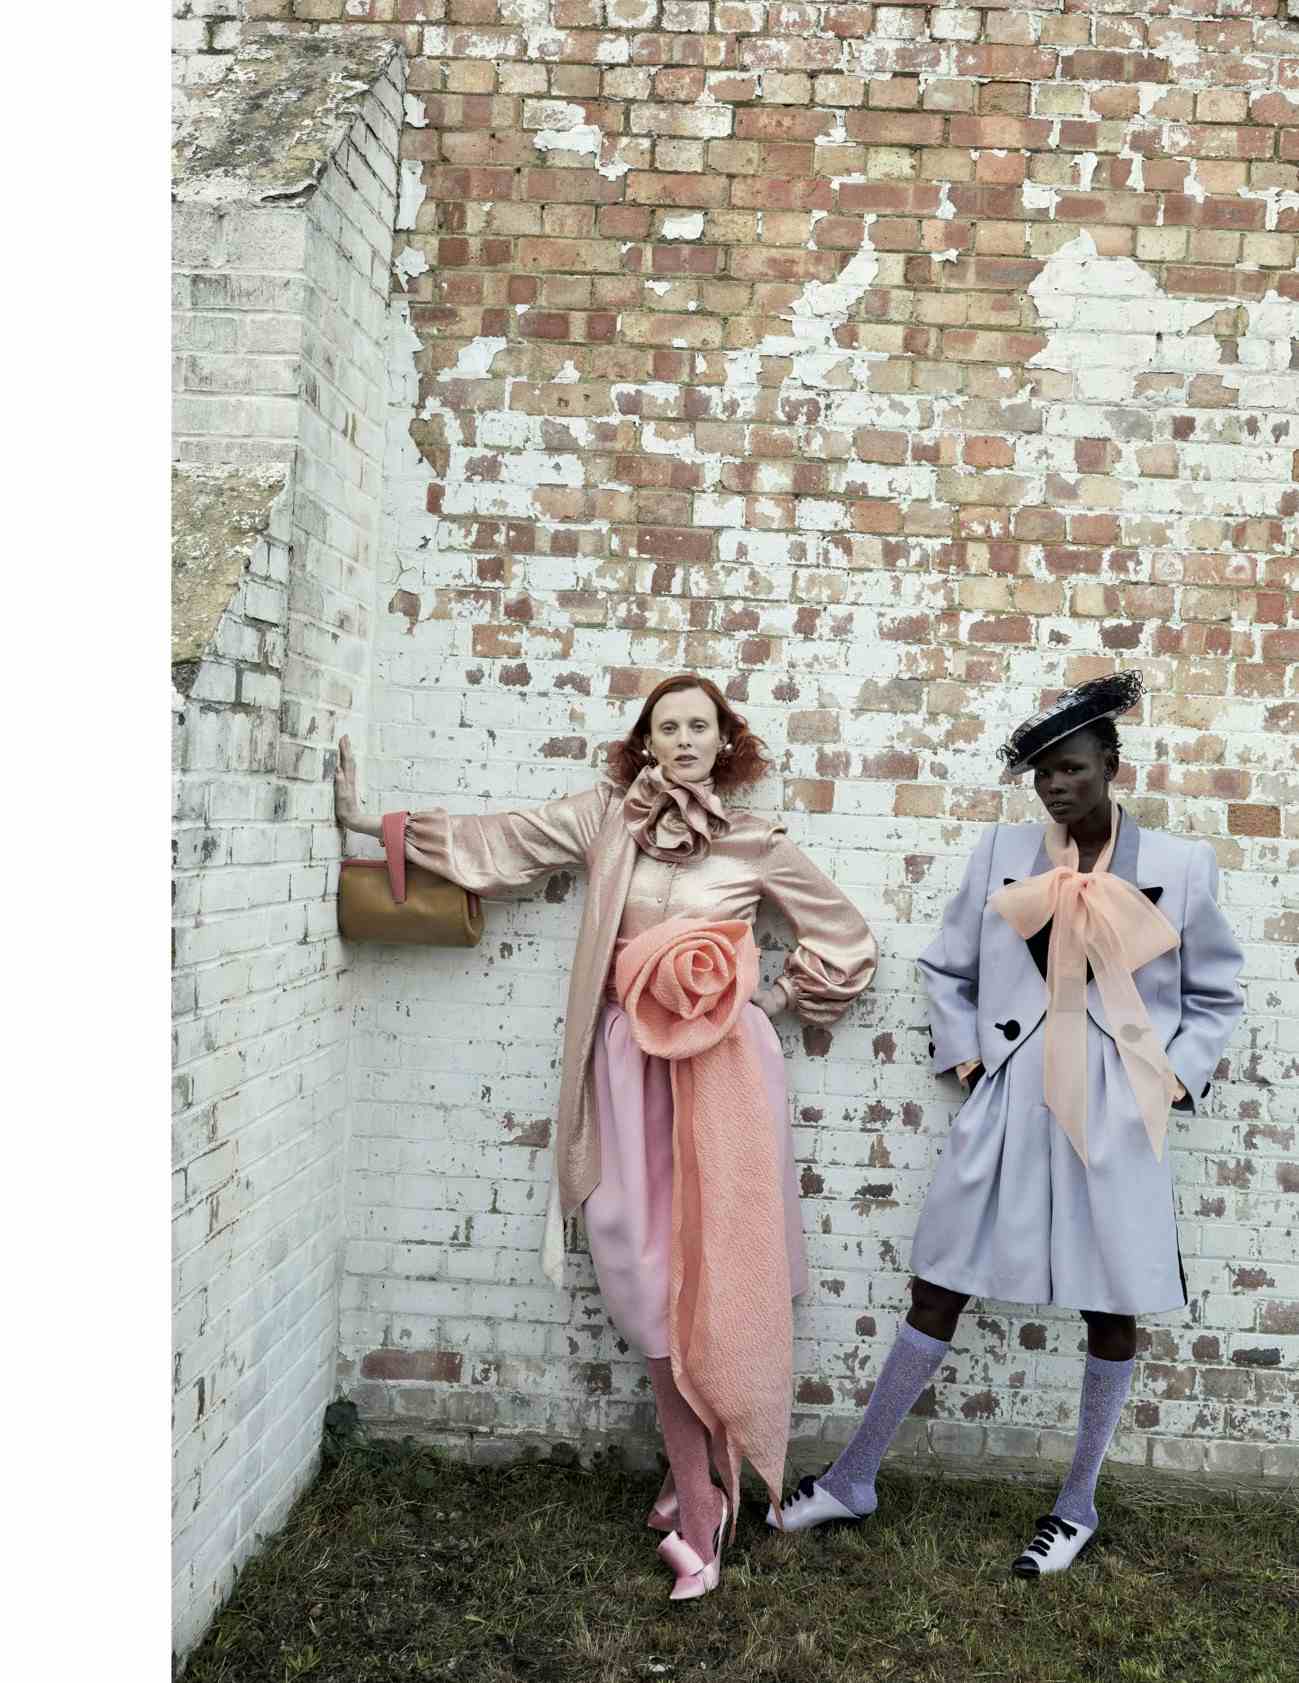 VOGUE UK - 2019
Photographer: Juergen Teller
Model: Karen, Shanelle
Location: London